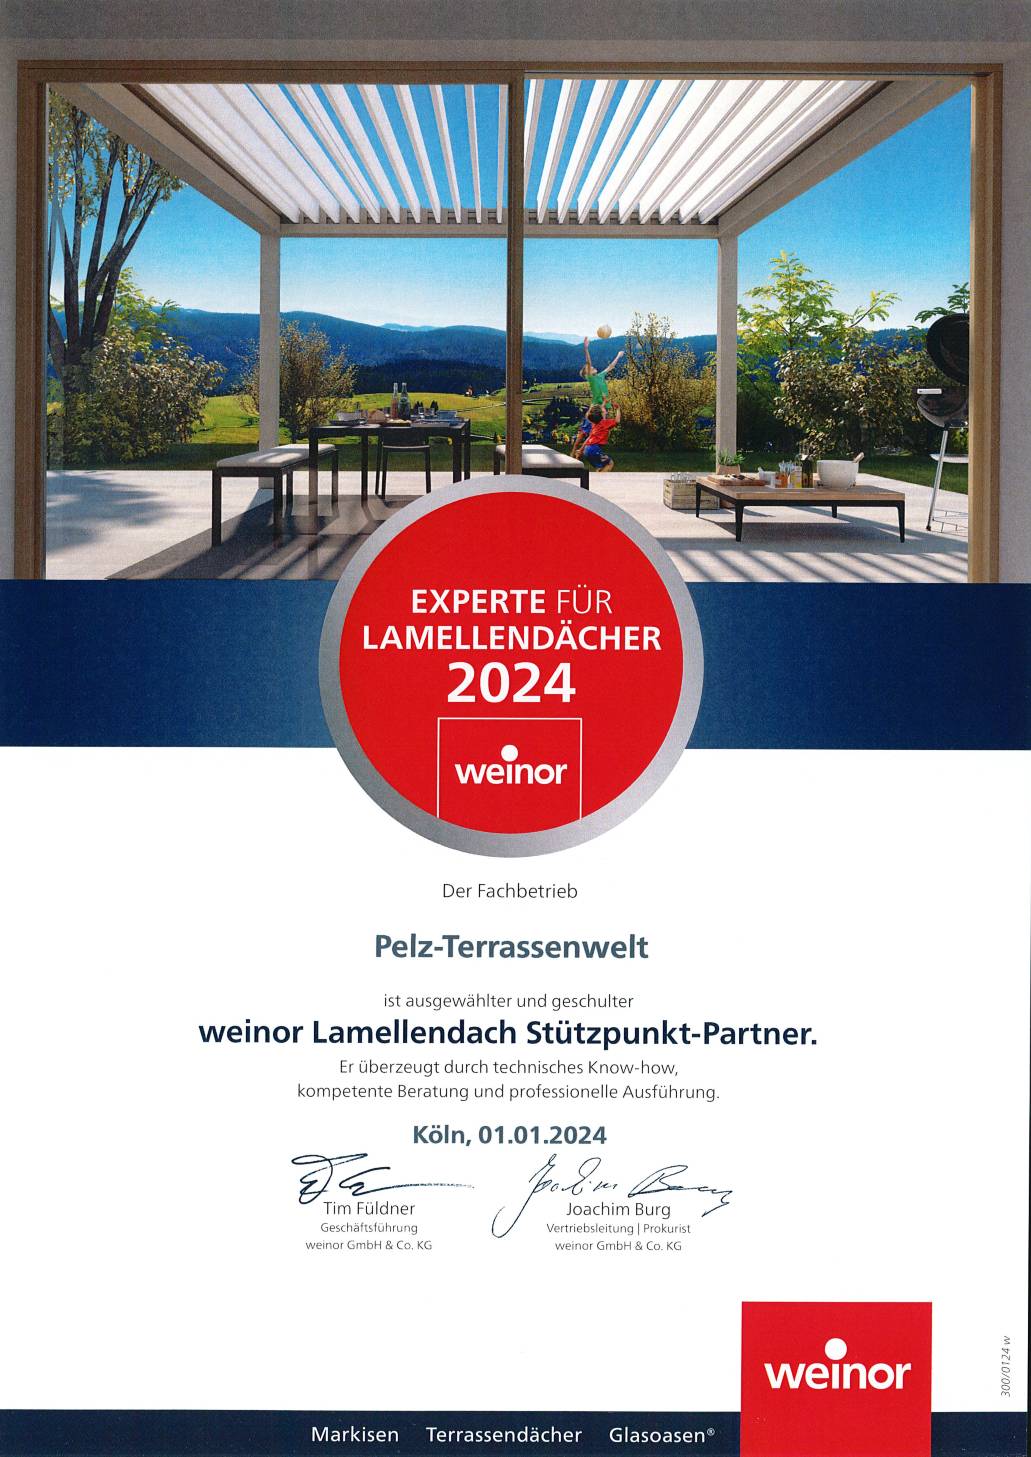 weinor Lamellendach-Experte | seit 2022